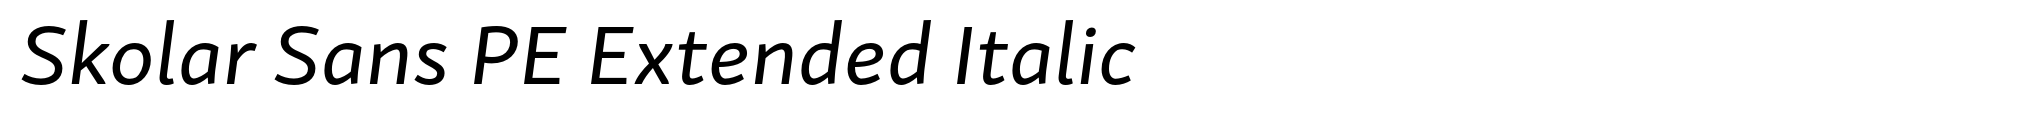 Skolar Sans PE Extended Italic image